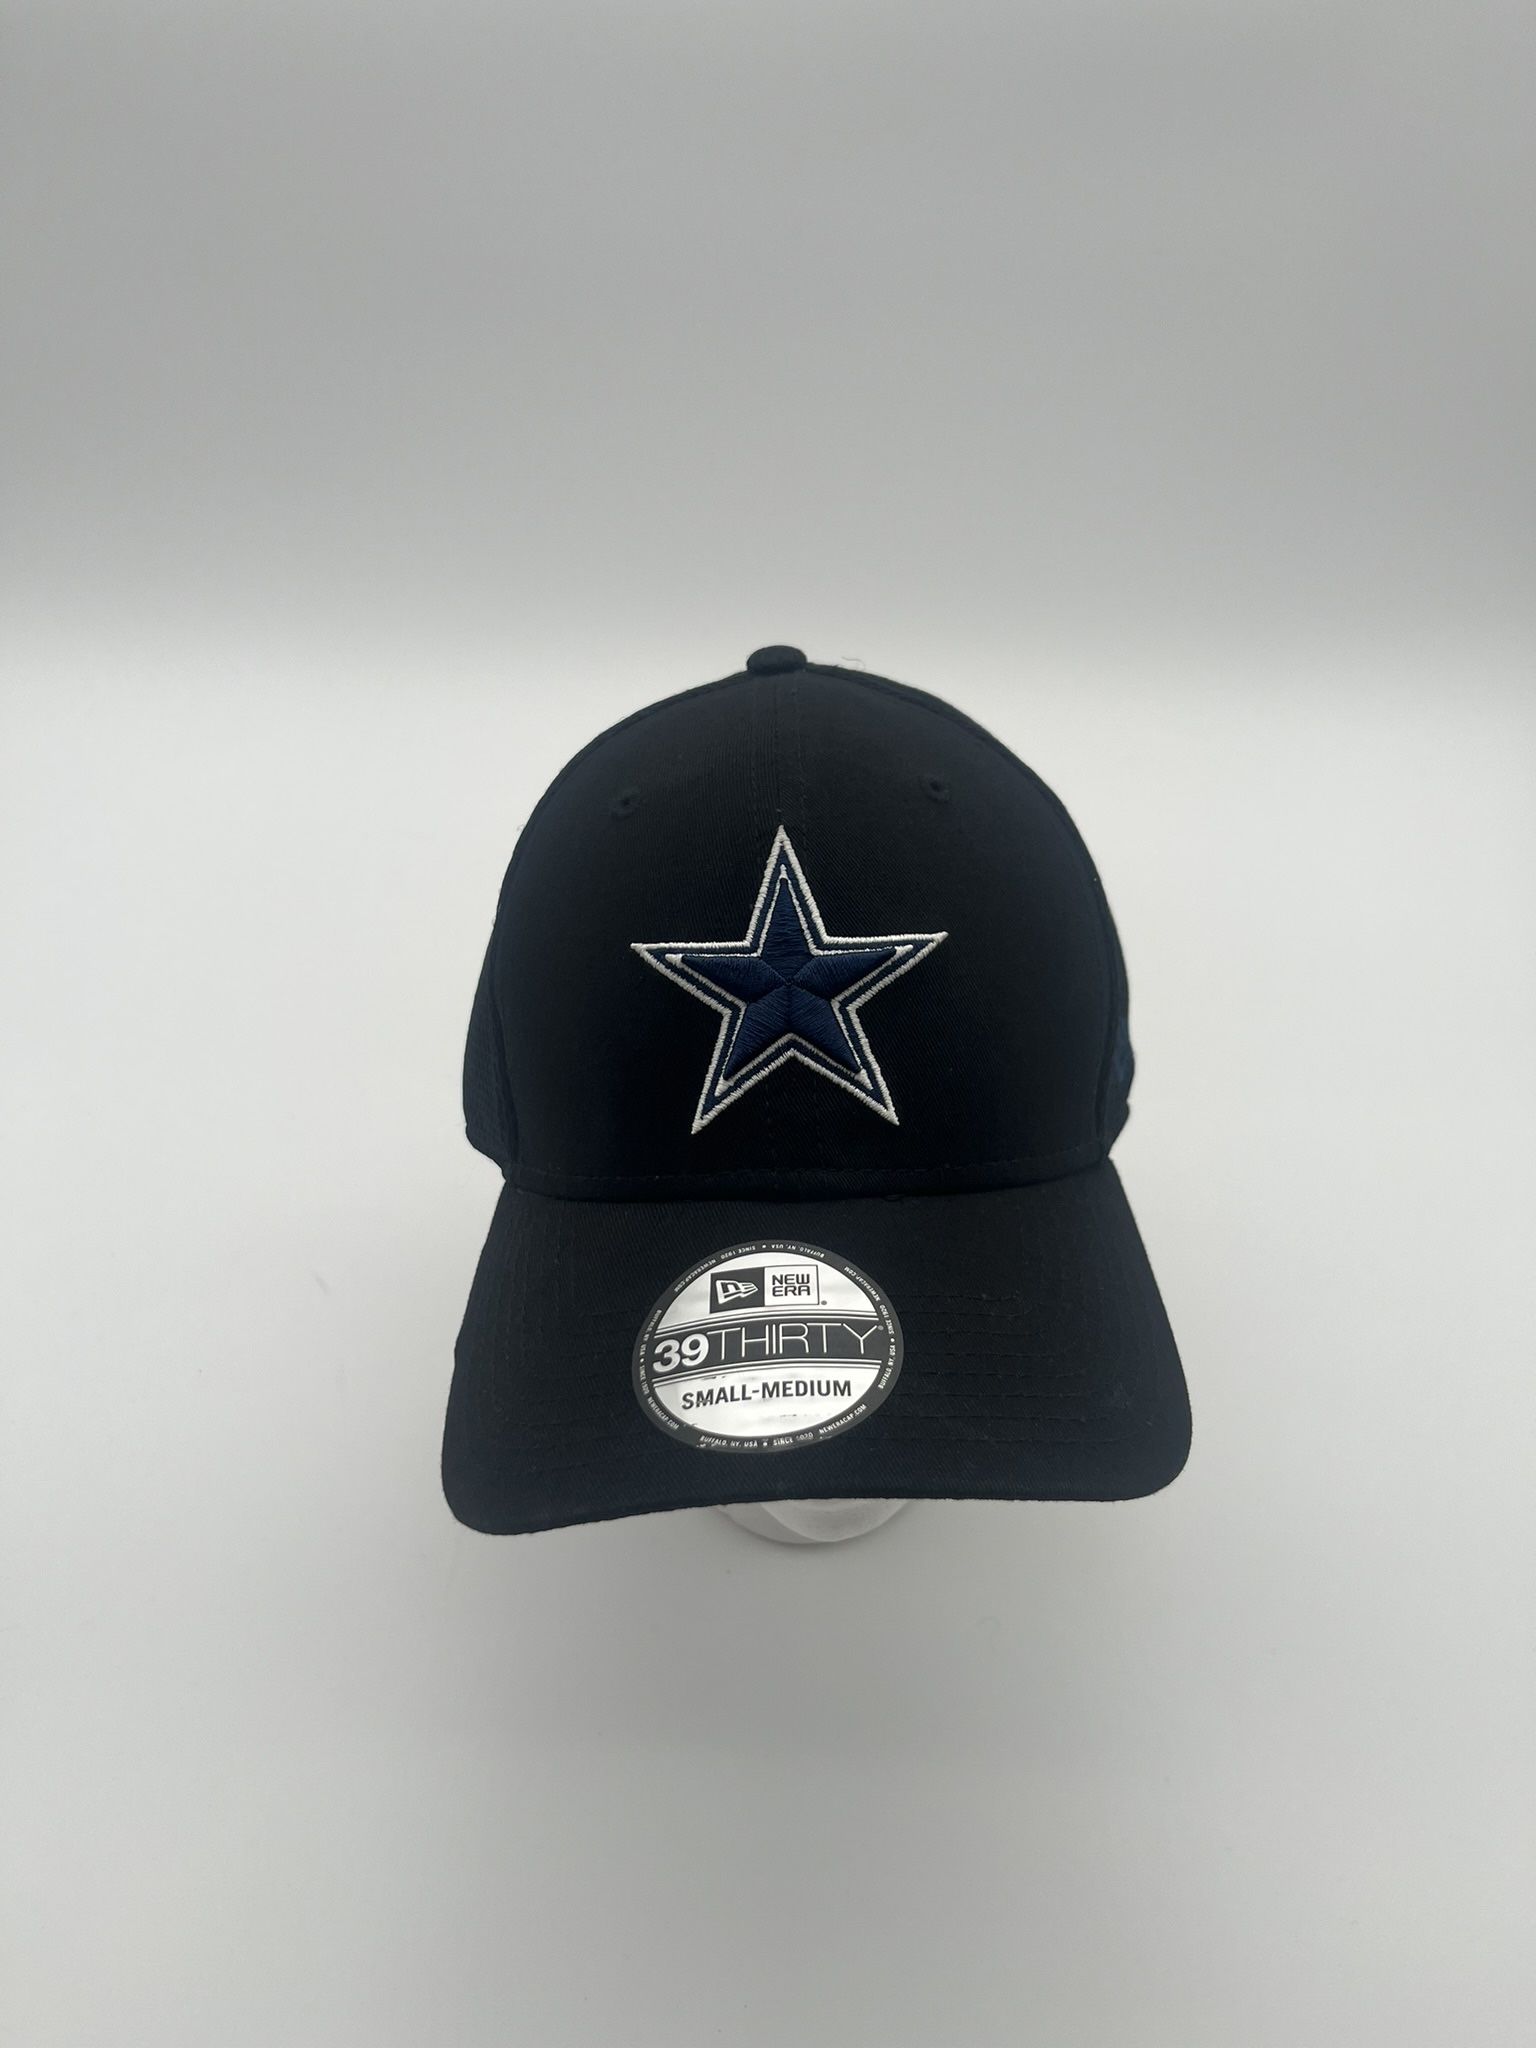 (45) Blue Star Black Hat New Era Hat Size Medium 